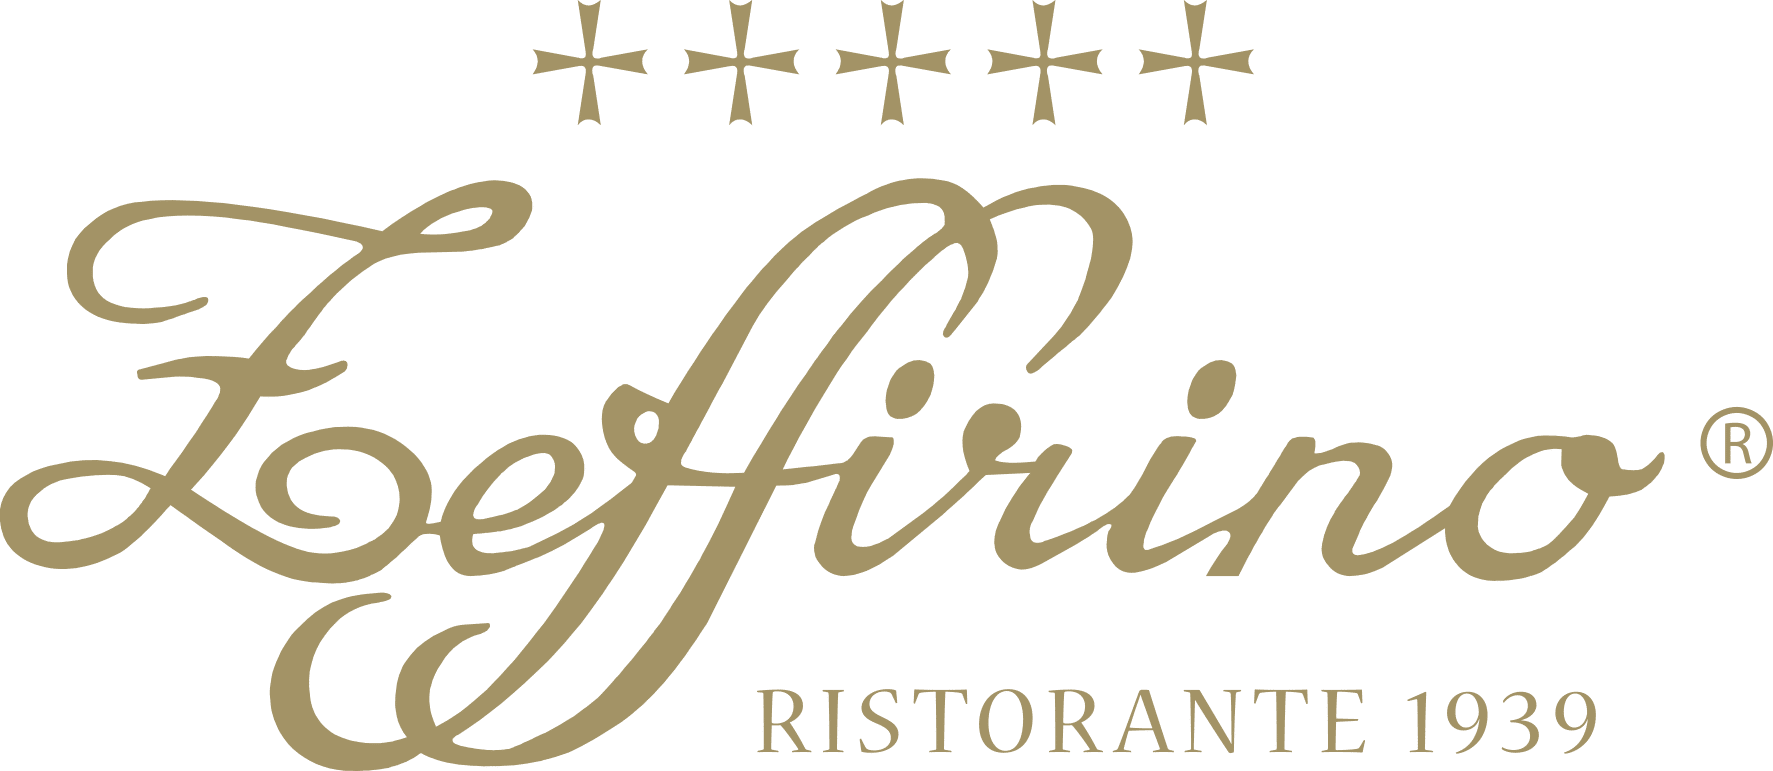 Zeffirino logo